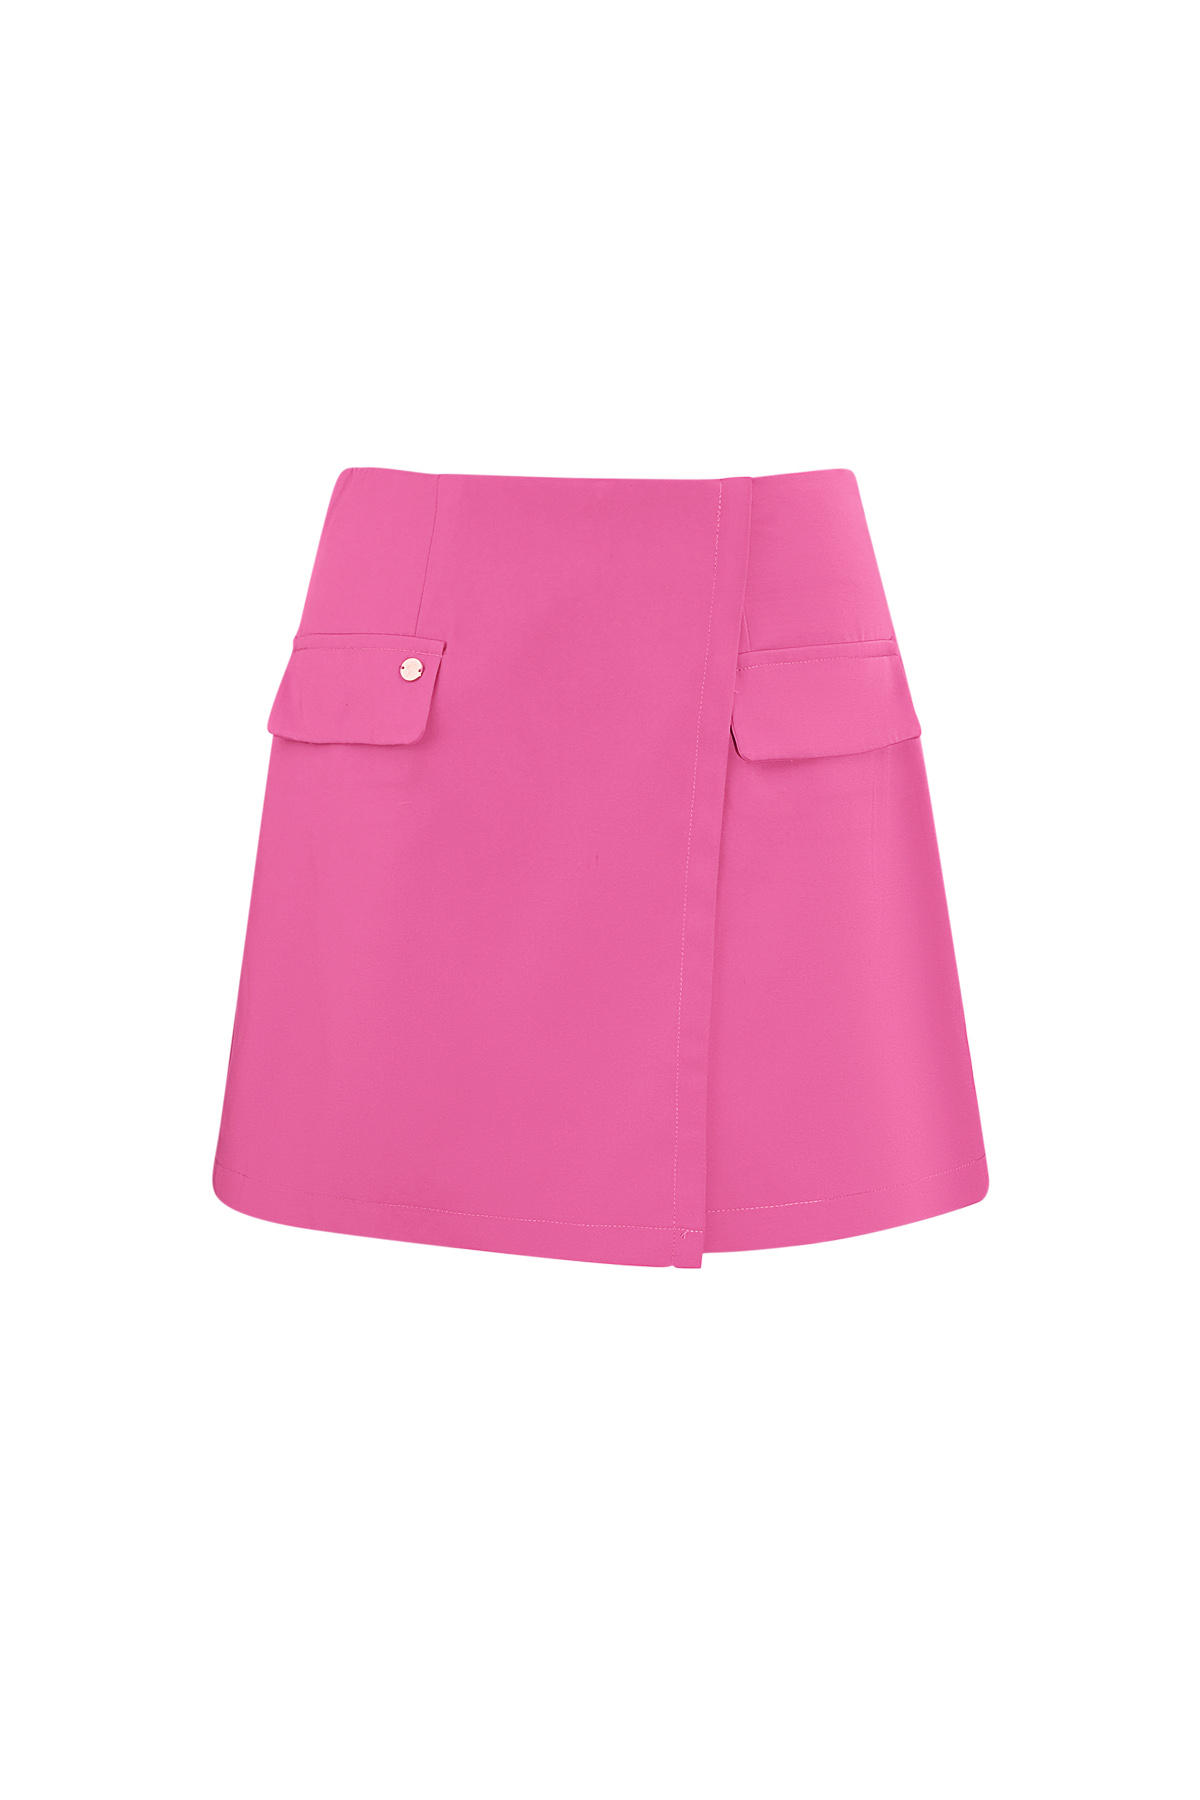 Plain pastel skirt - fuchsia